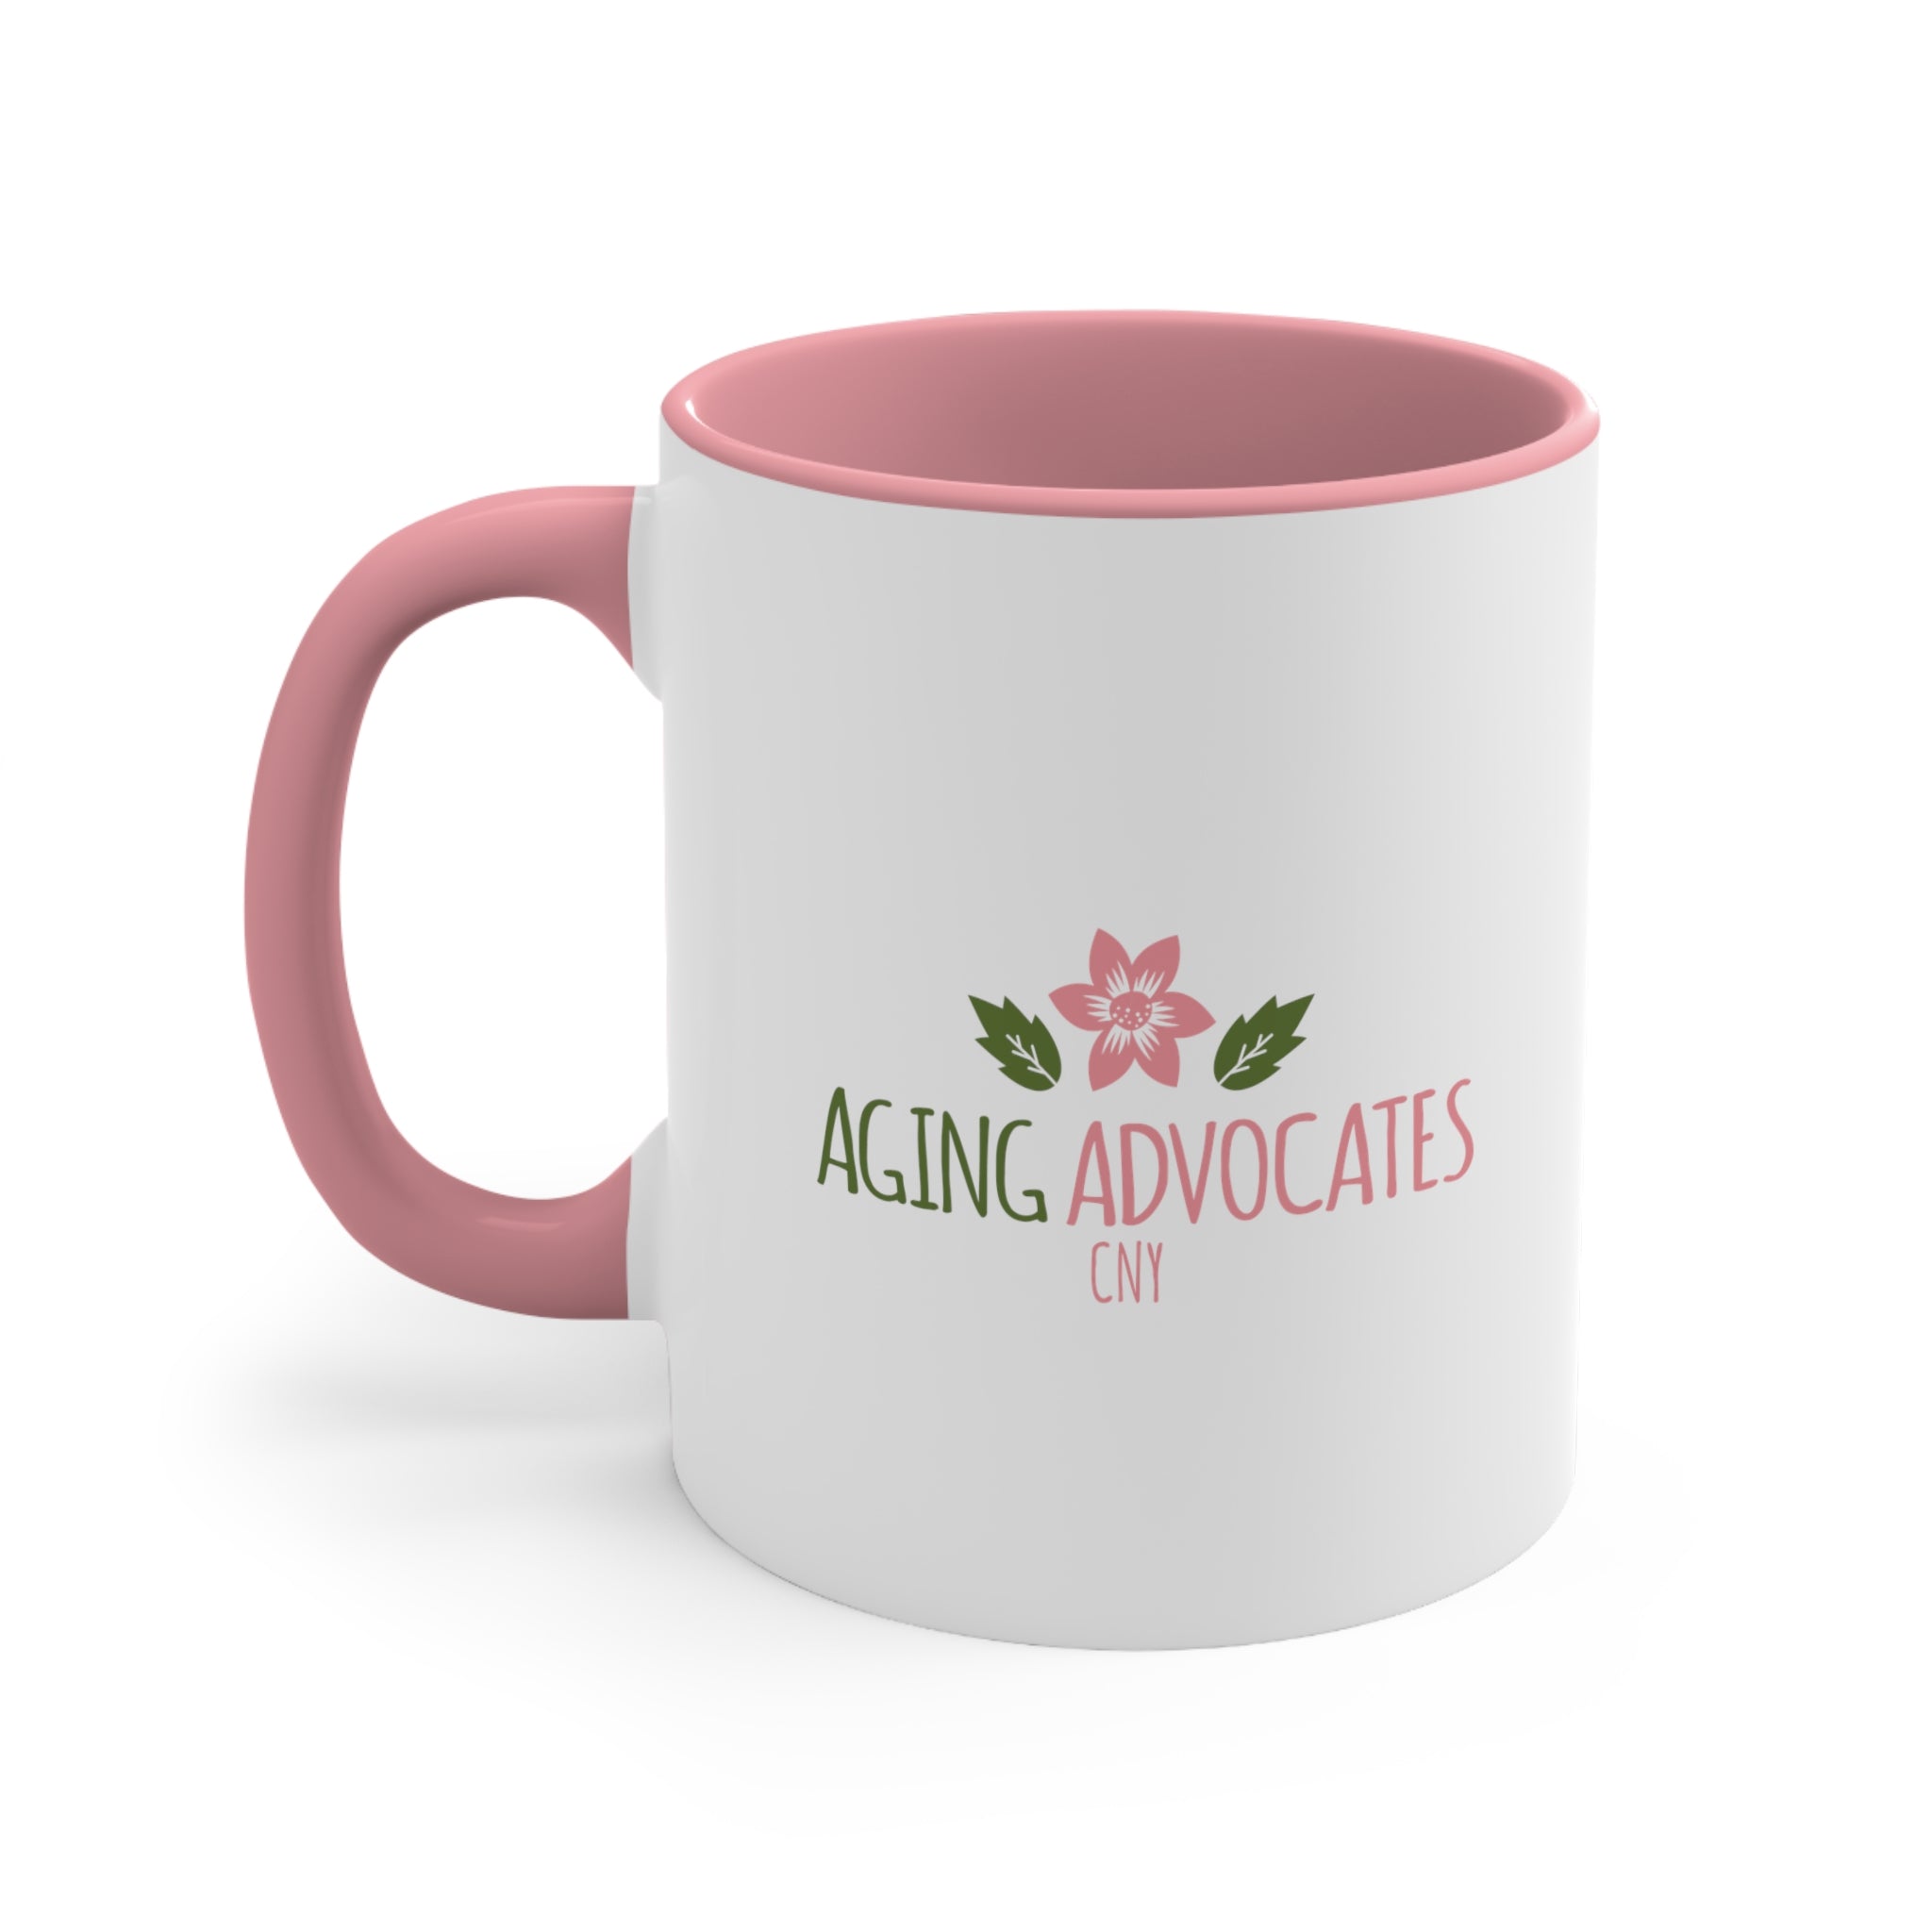 Aging Advocates Accent Coffee Mug, 11oz